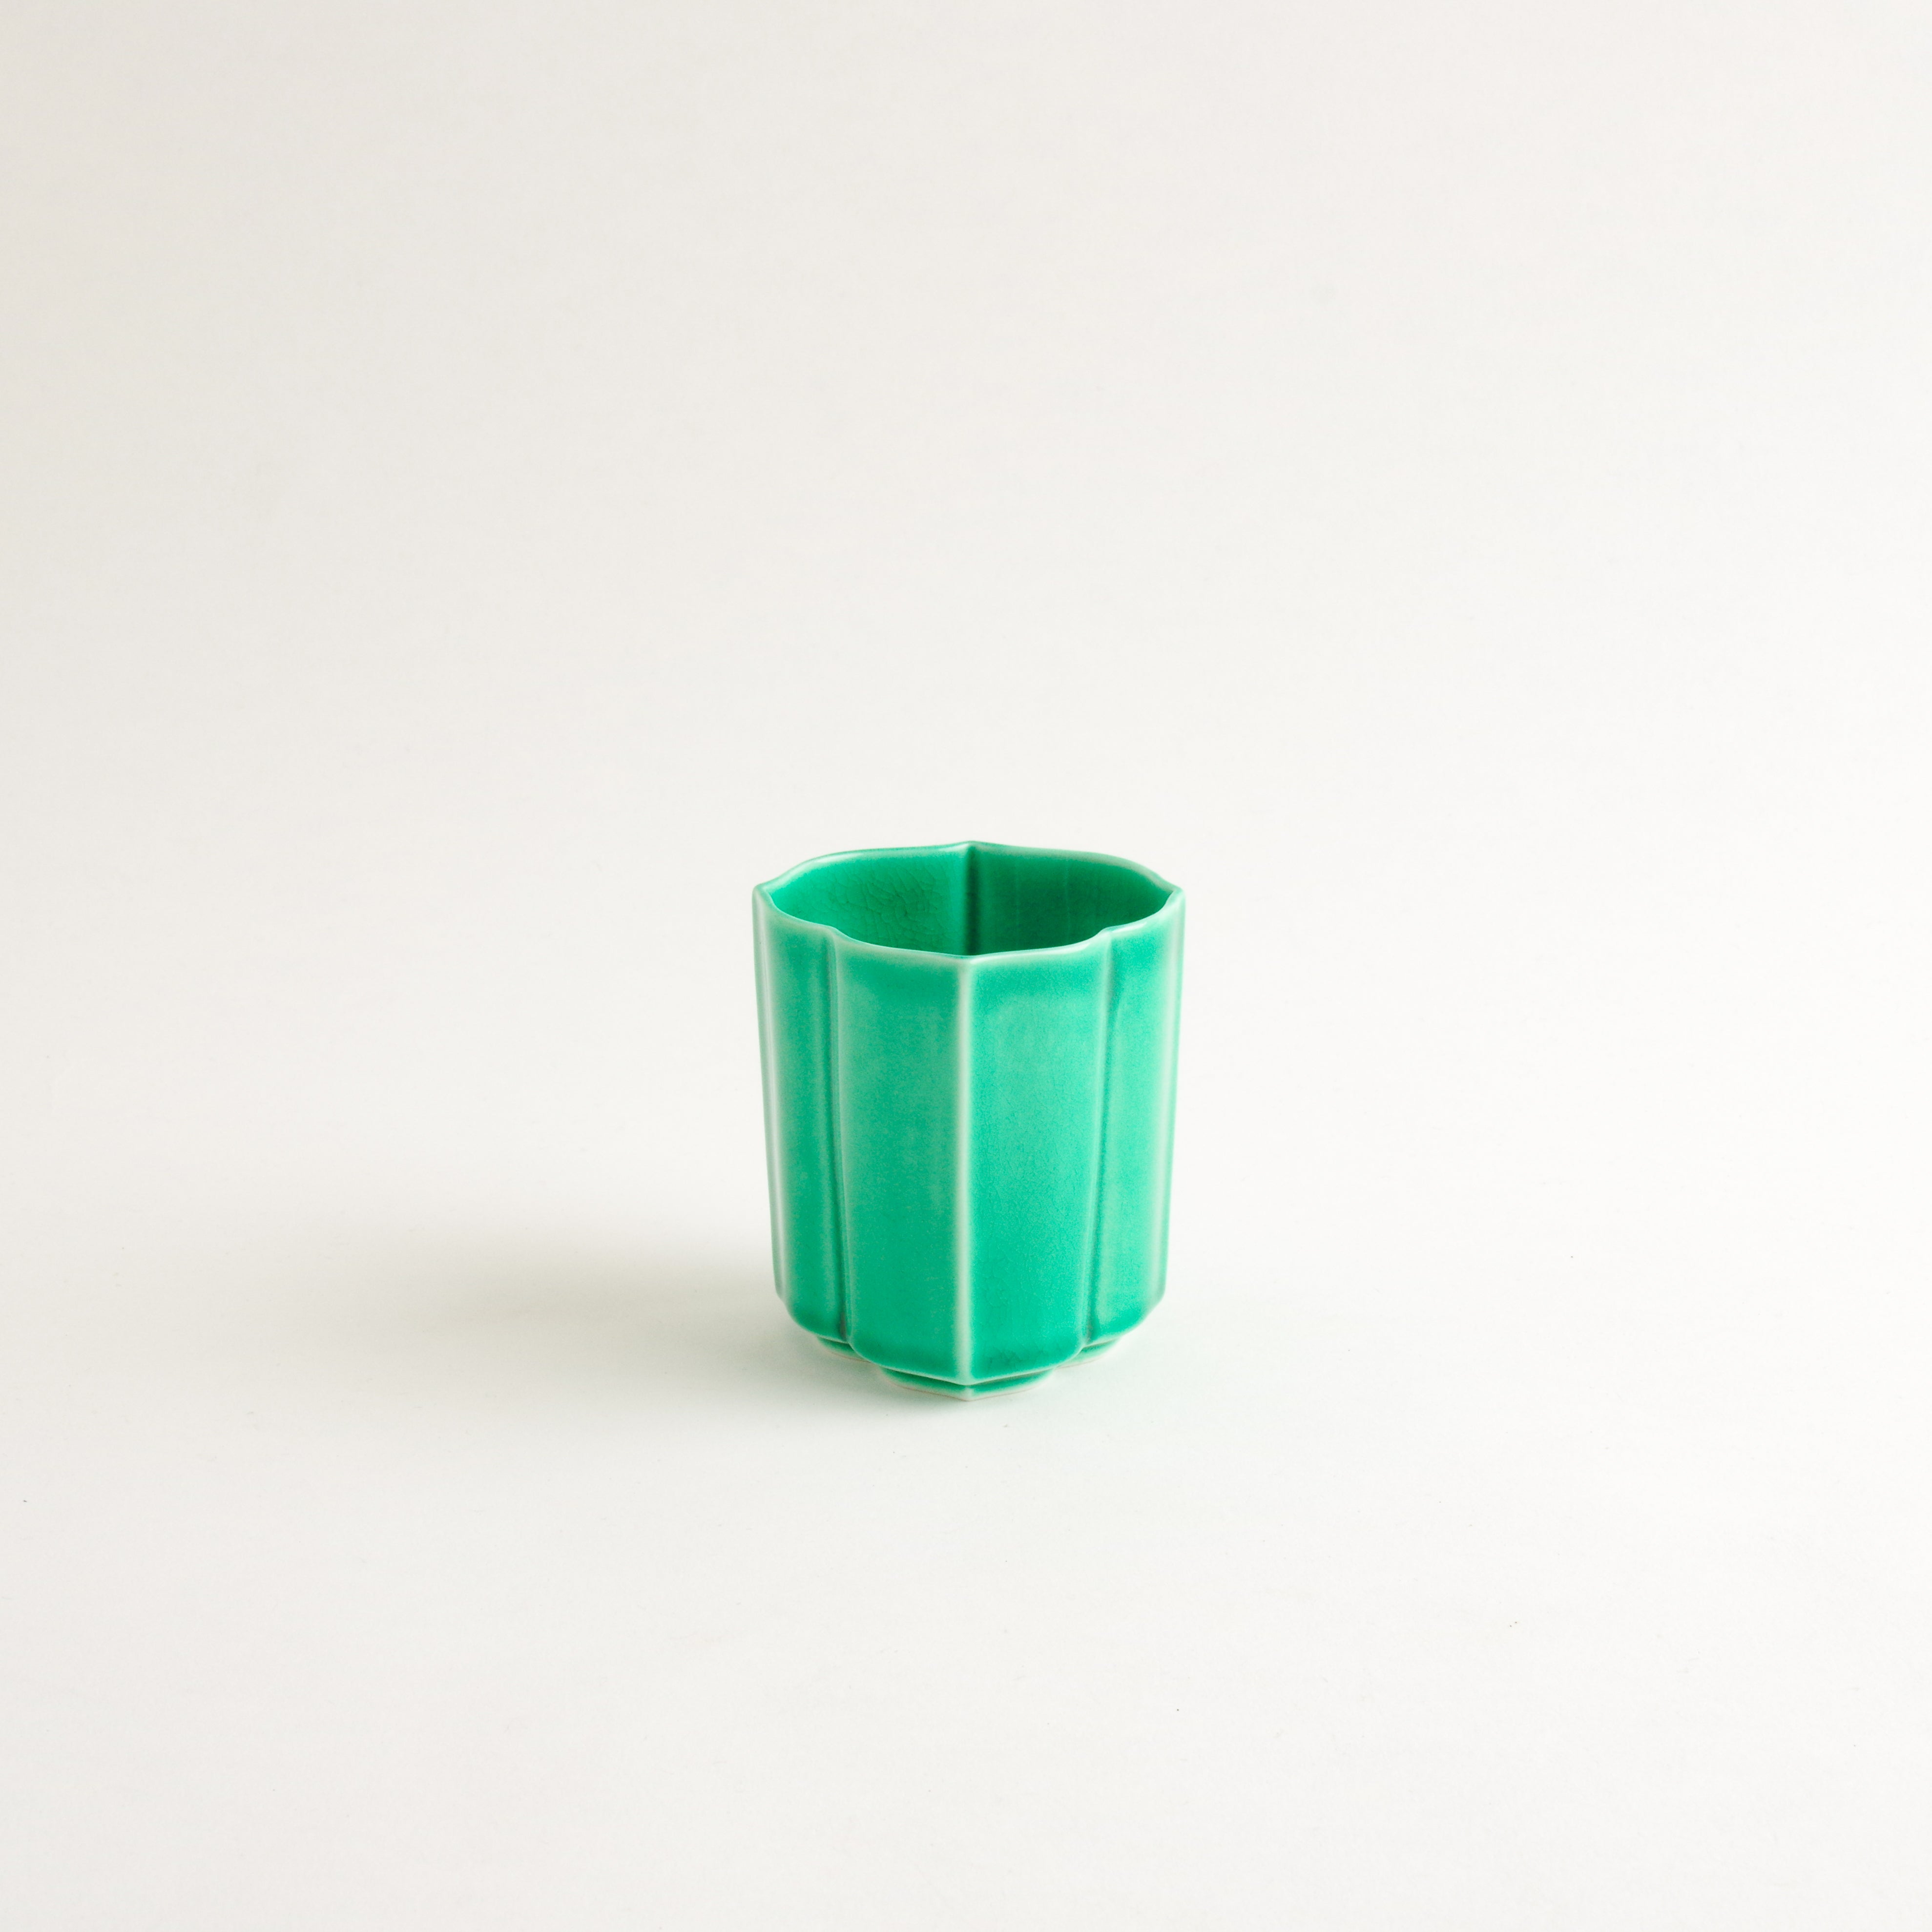 伊万里焼 宝珠型 筒小付 7cm [全2種] 緑交趾(グリーン) Sehyo Studio1156